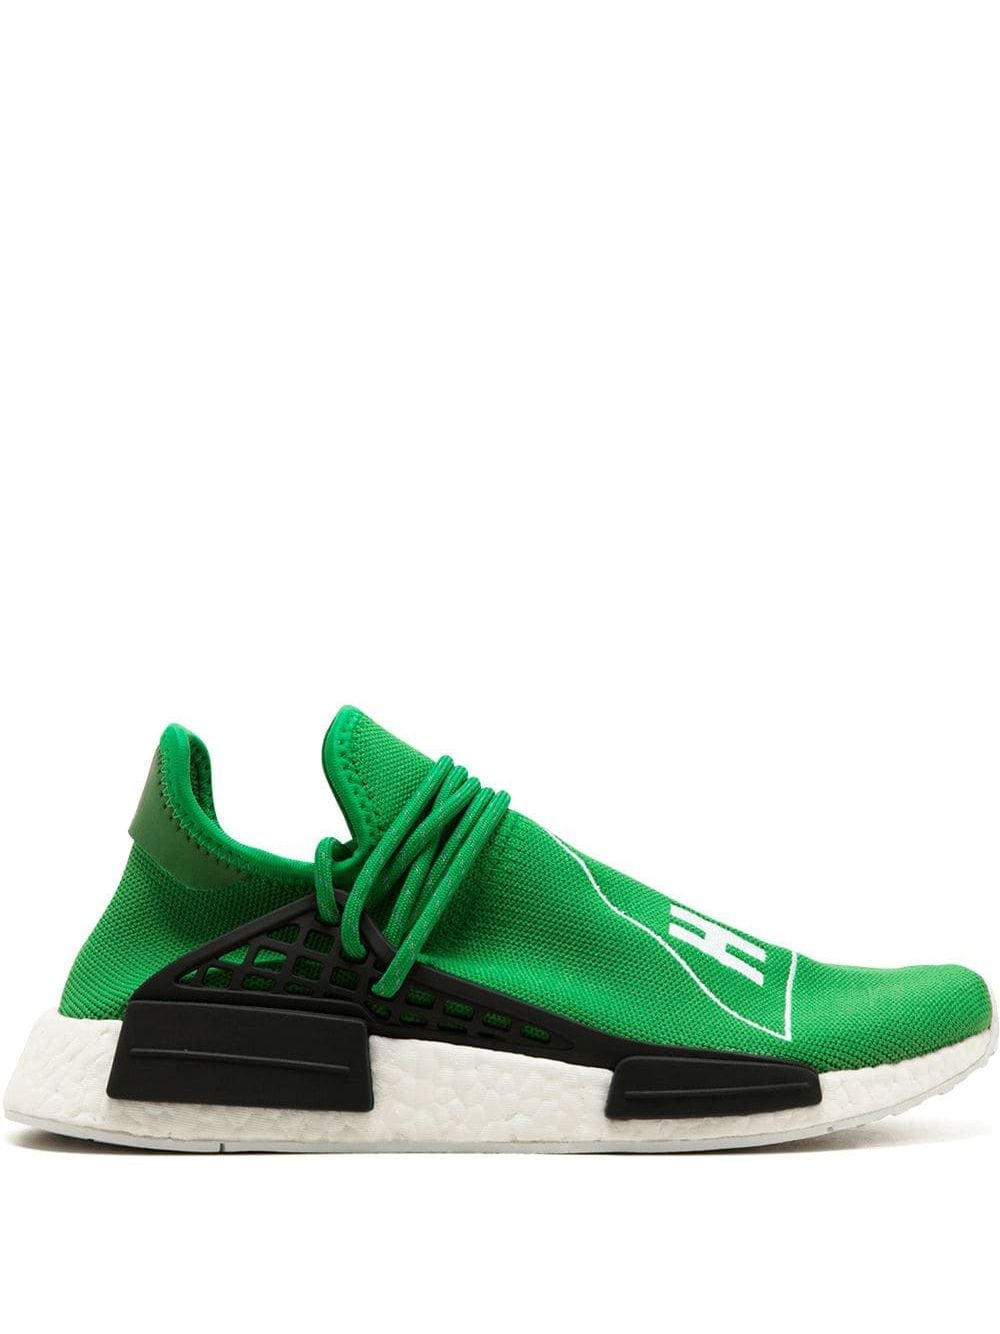 Image 1 of adidas x Pharrell Williams Human Race NMD "Green" sneakers